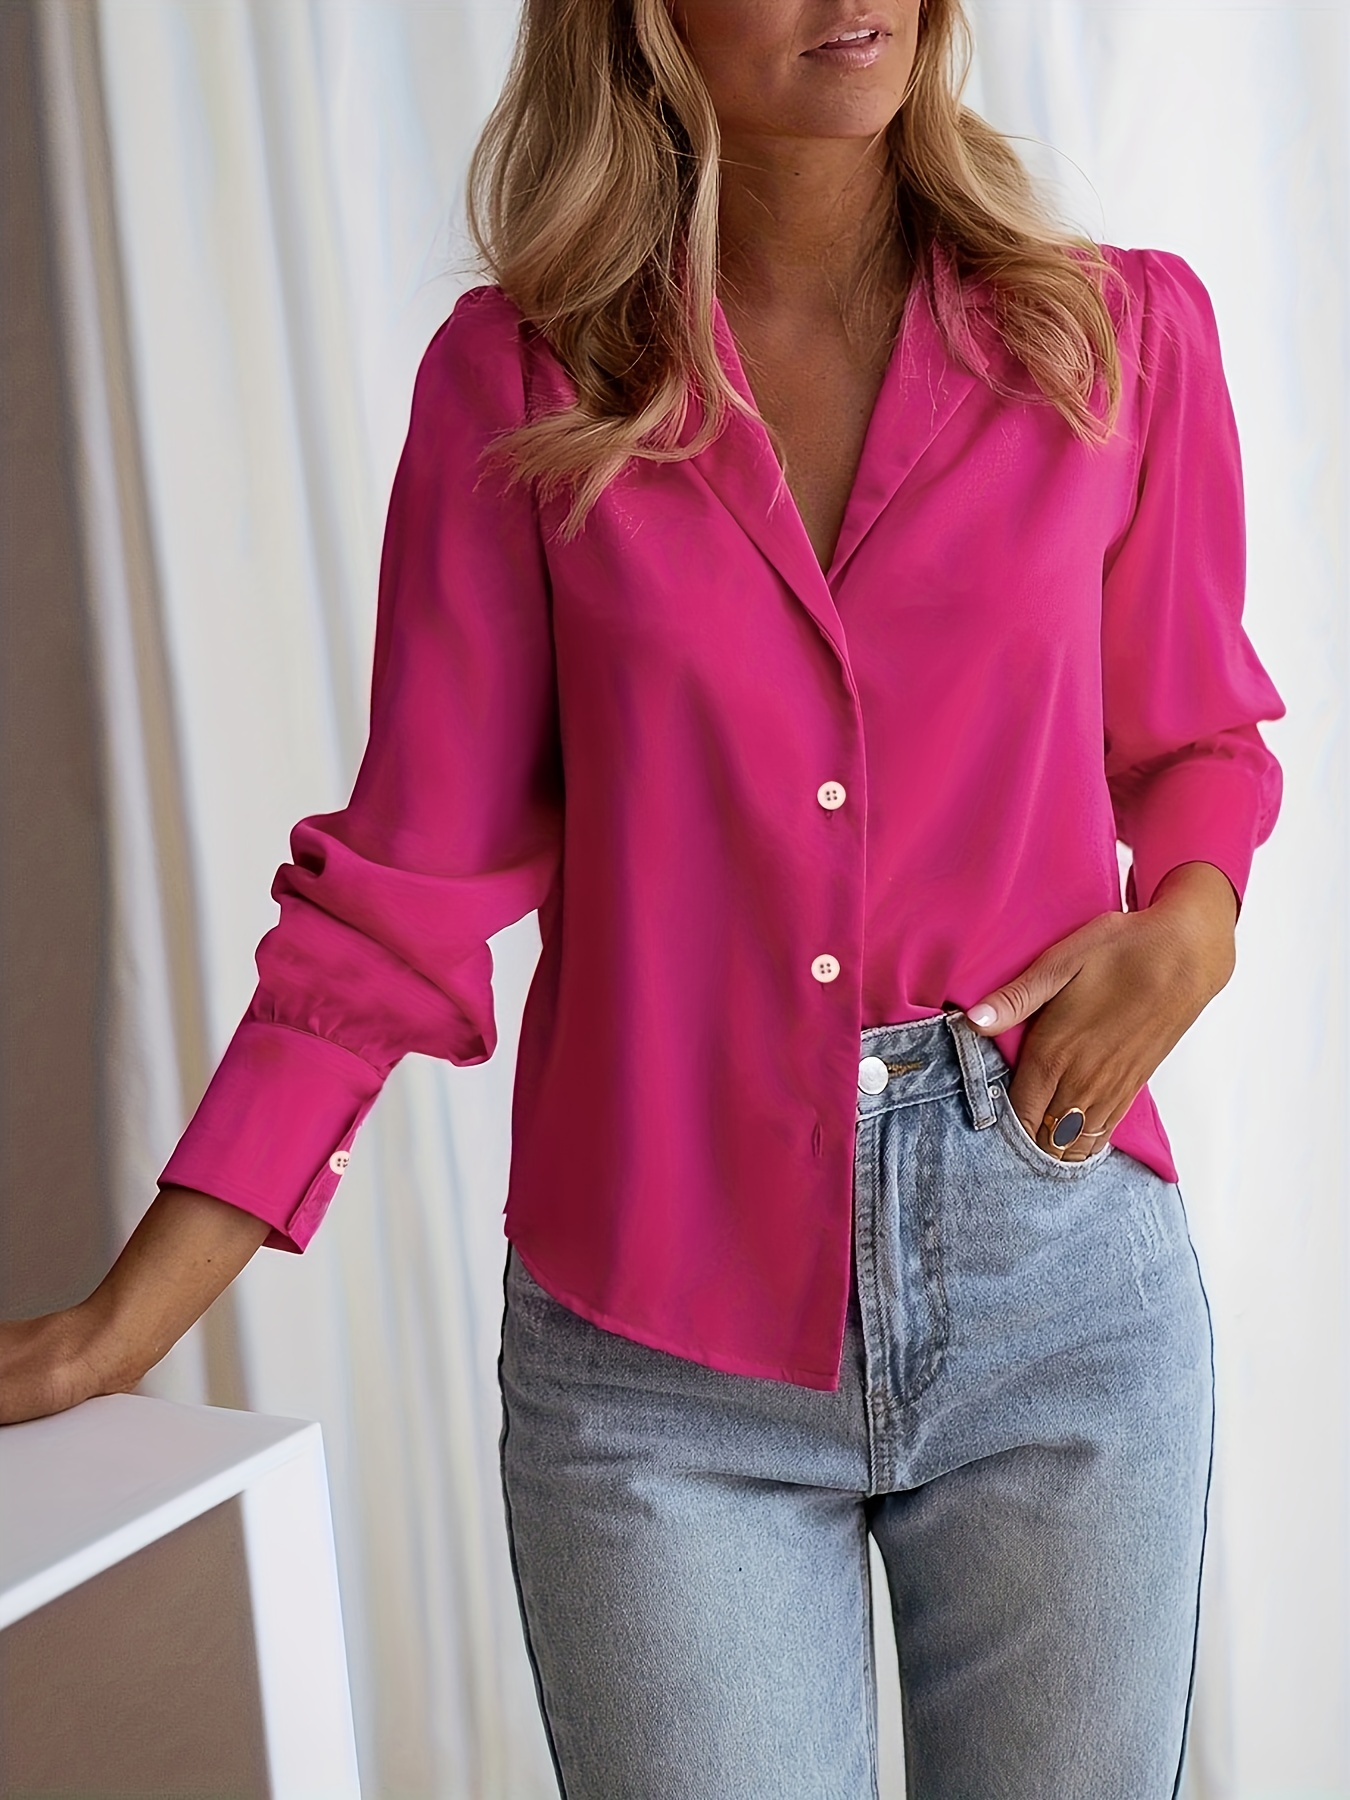 Pink Elegant Female Shirt, Shirt Women Pink Color